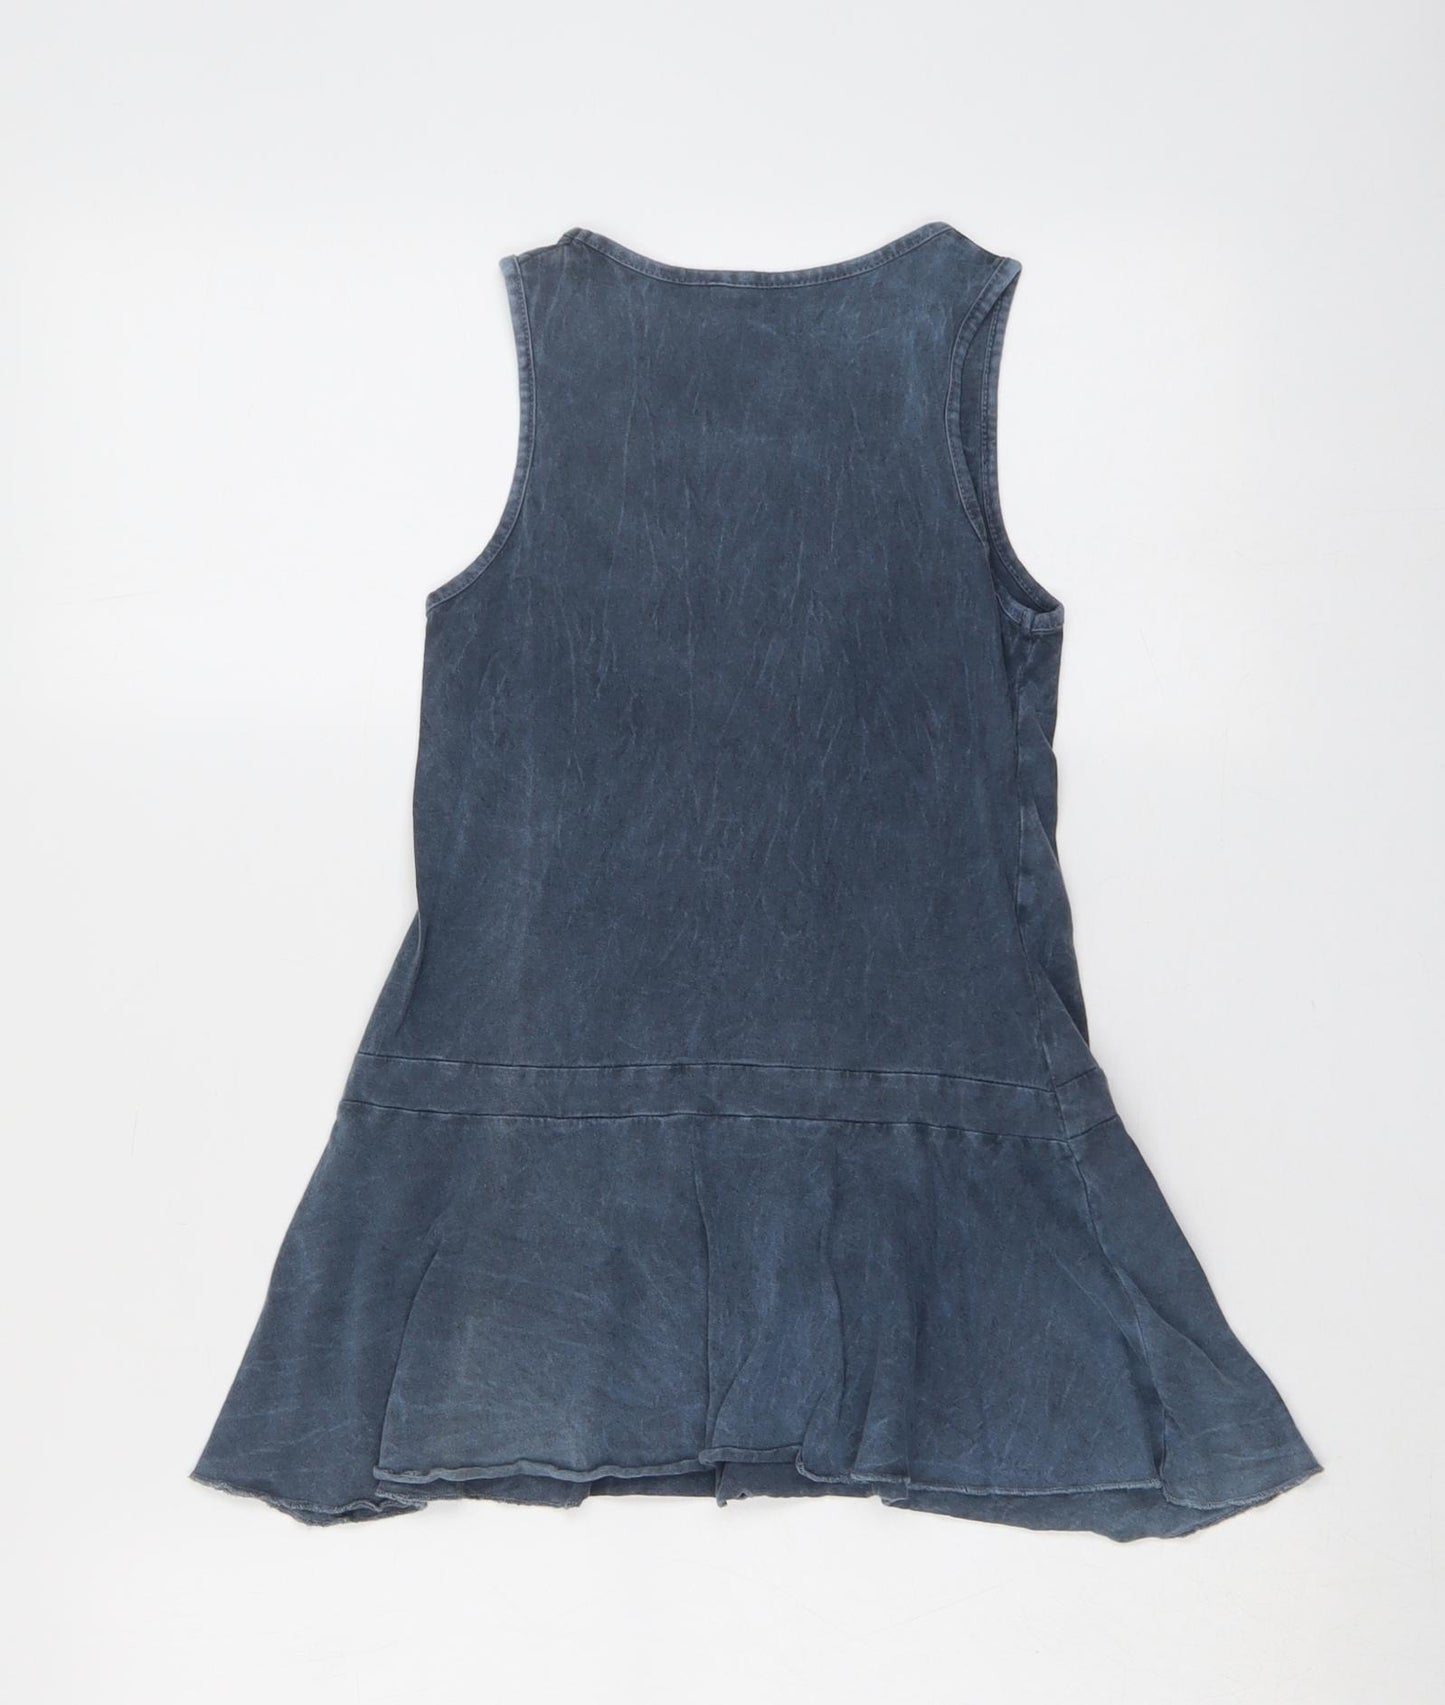 Safon Girls Blue Cotton Tank Dress Size 6 Years Boat Neck Pullover - Menorca